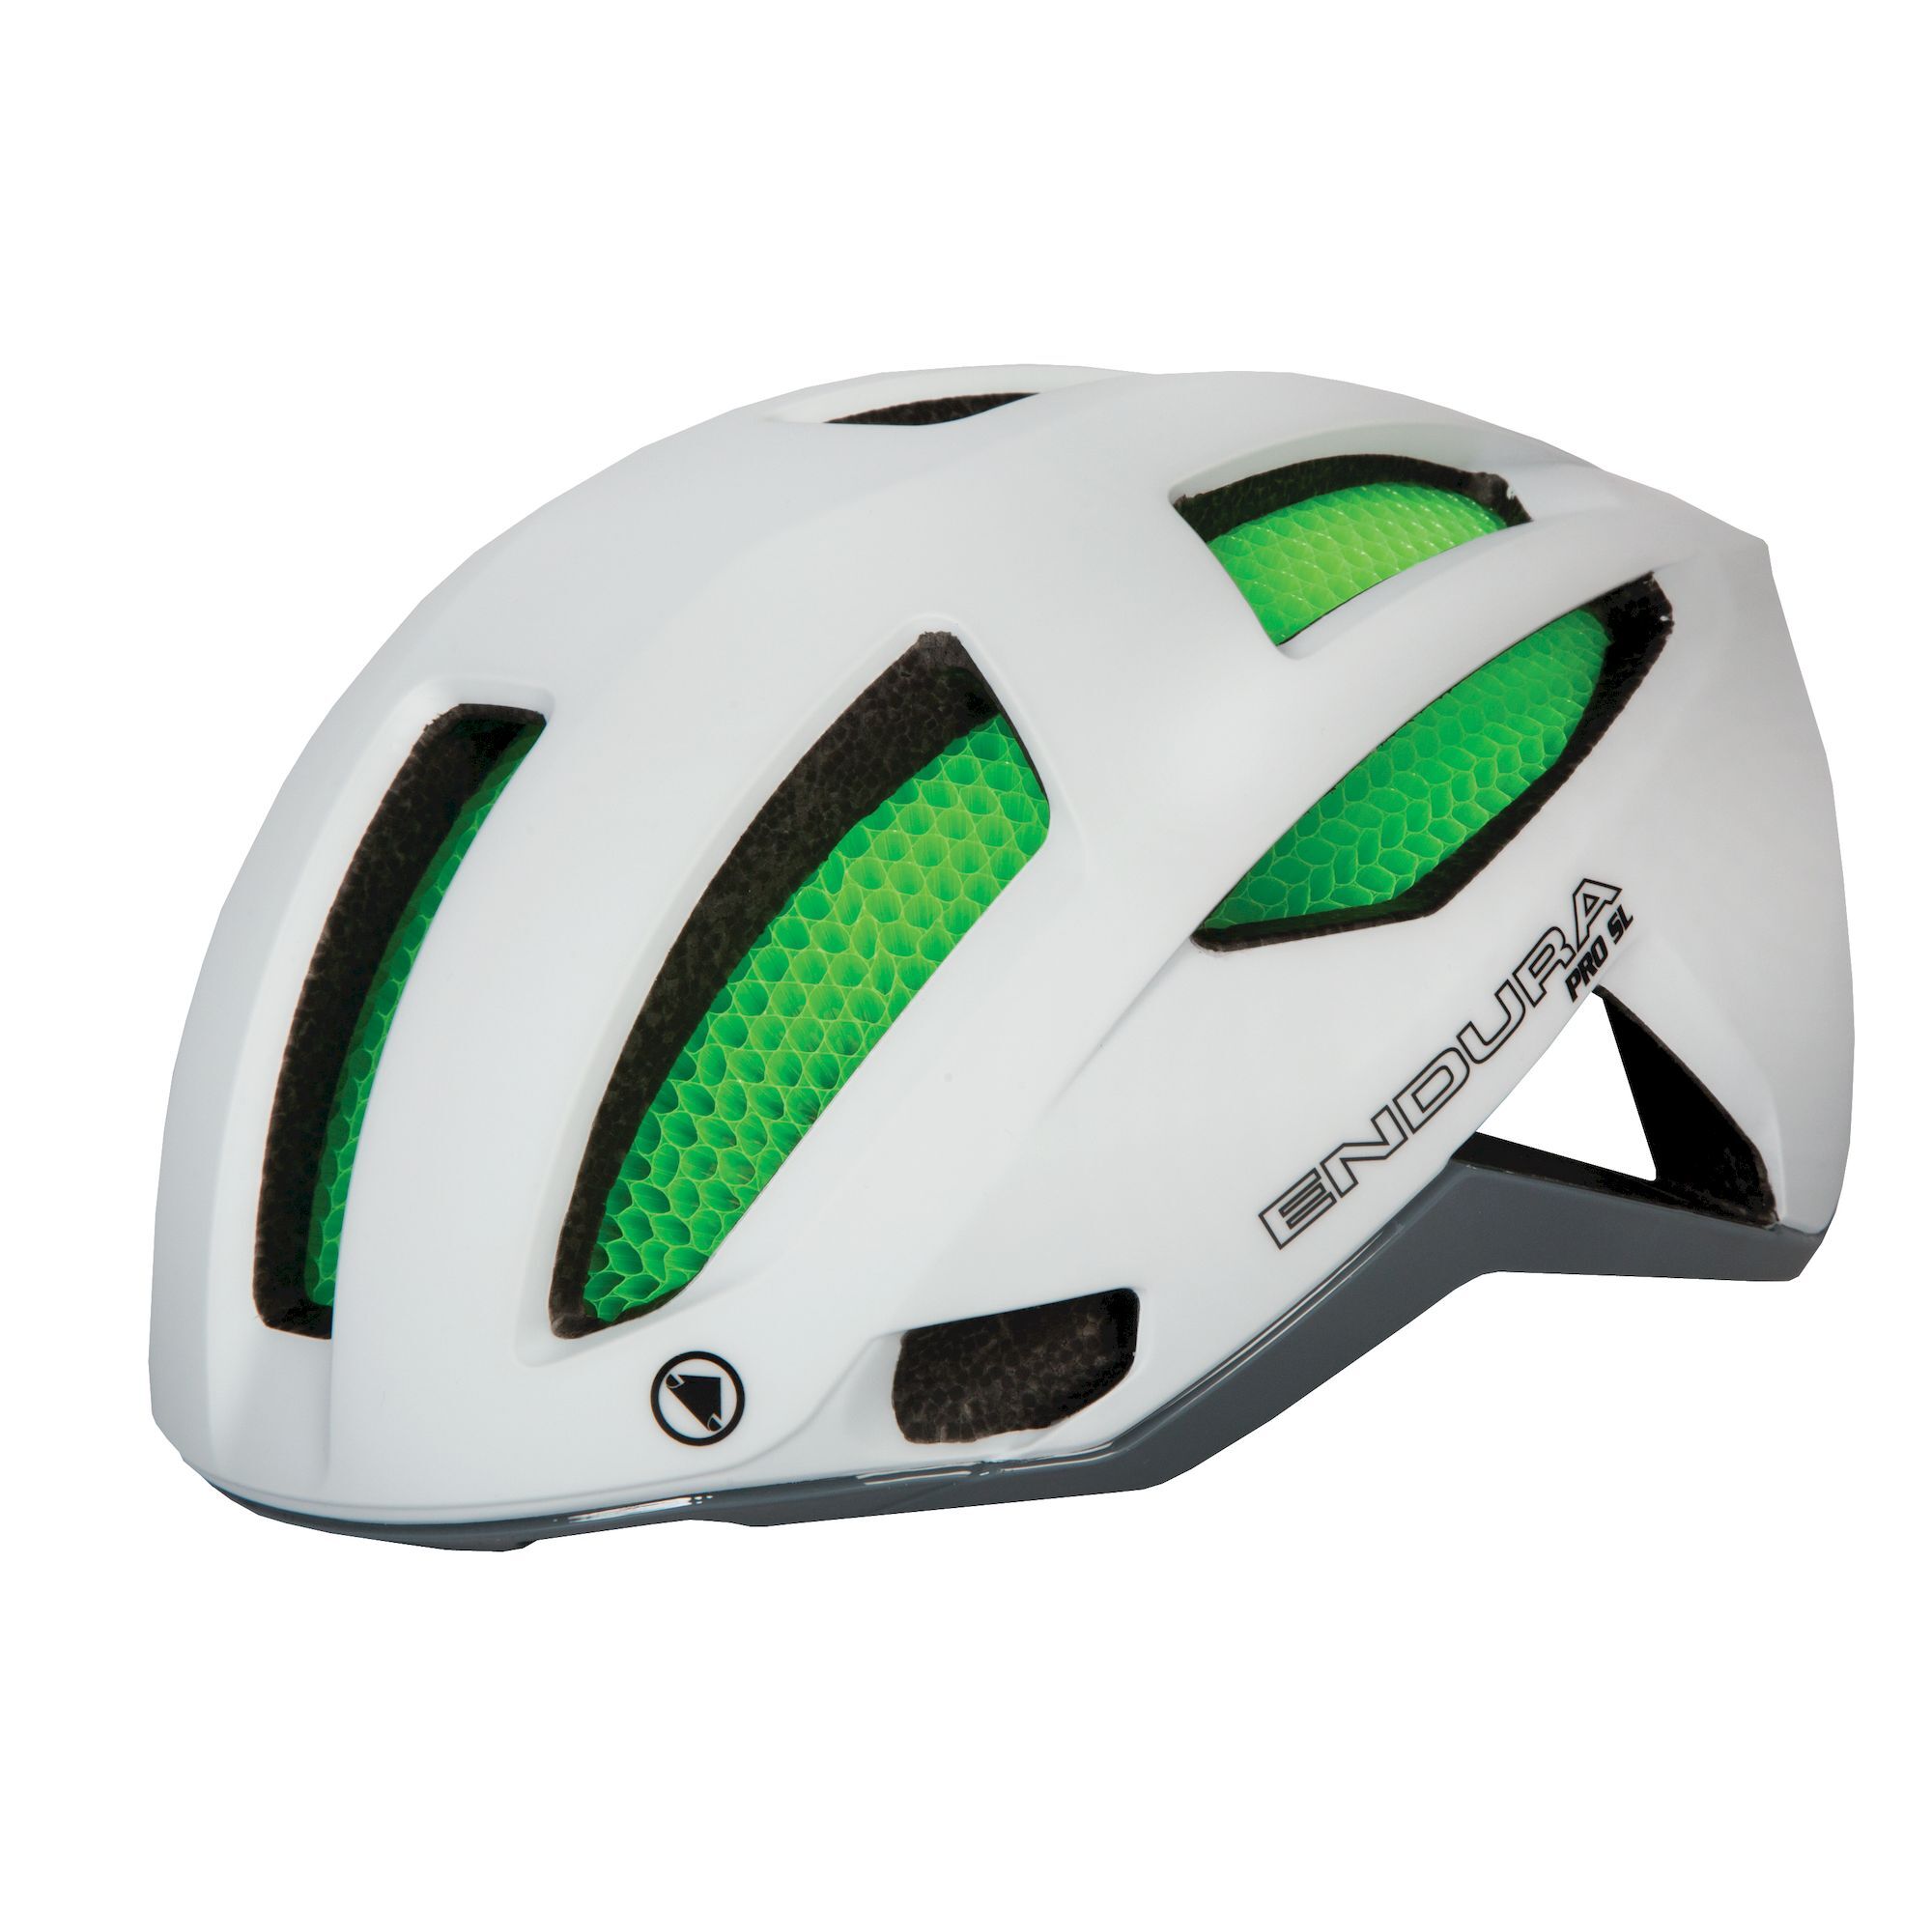 ENDURA Pro SL Helmet - Road bike helmet - Men's